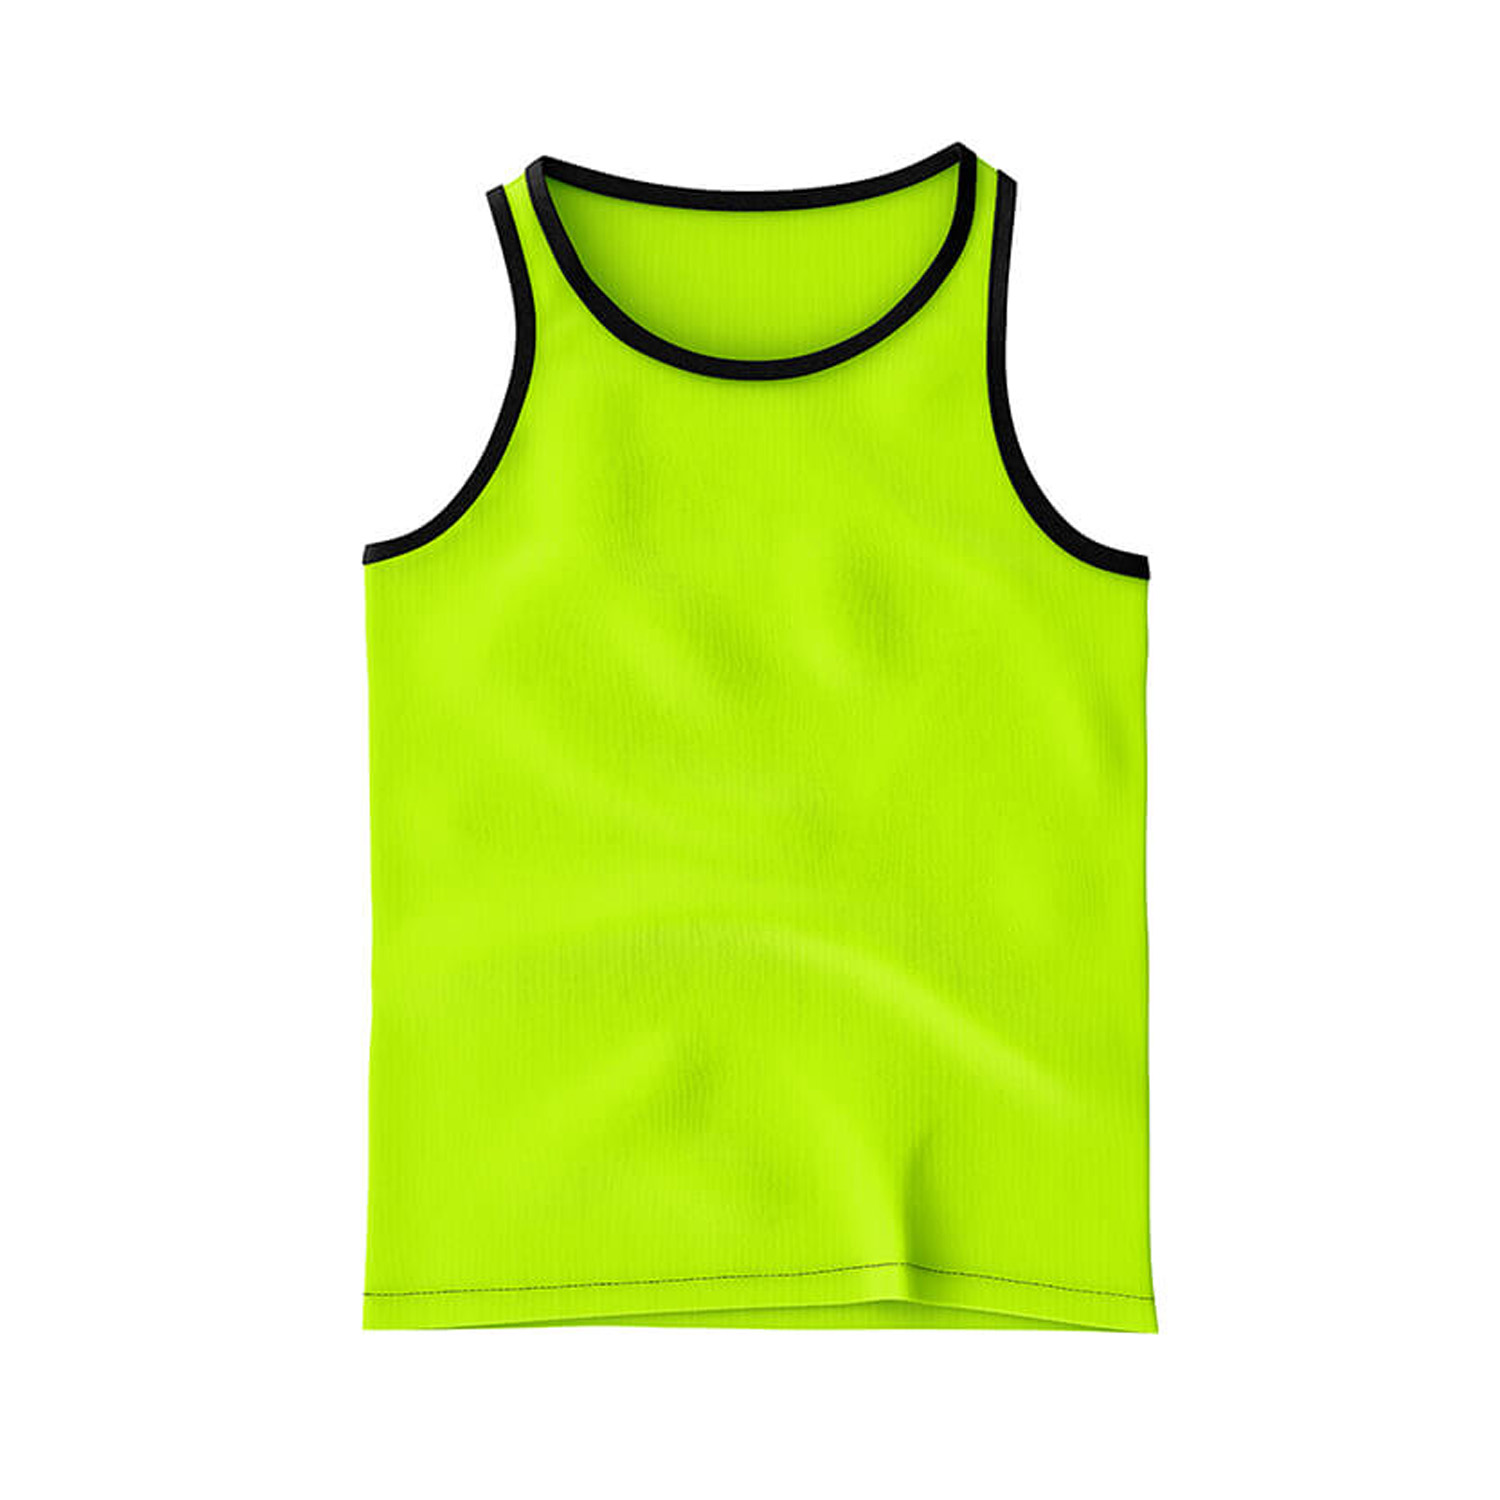 Helix Jersey Training Vest - Green